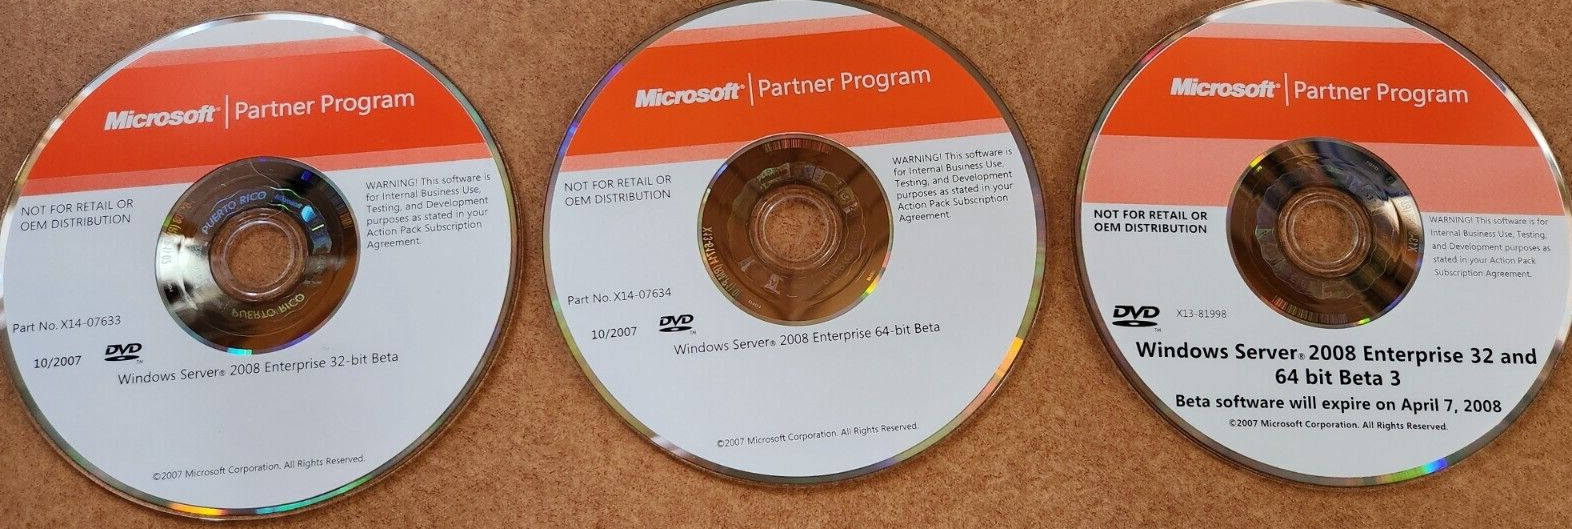 Microsoft Windows Server 2008 Enterprise 32 and 64 bit Beta  and Beta 3 + Key